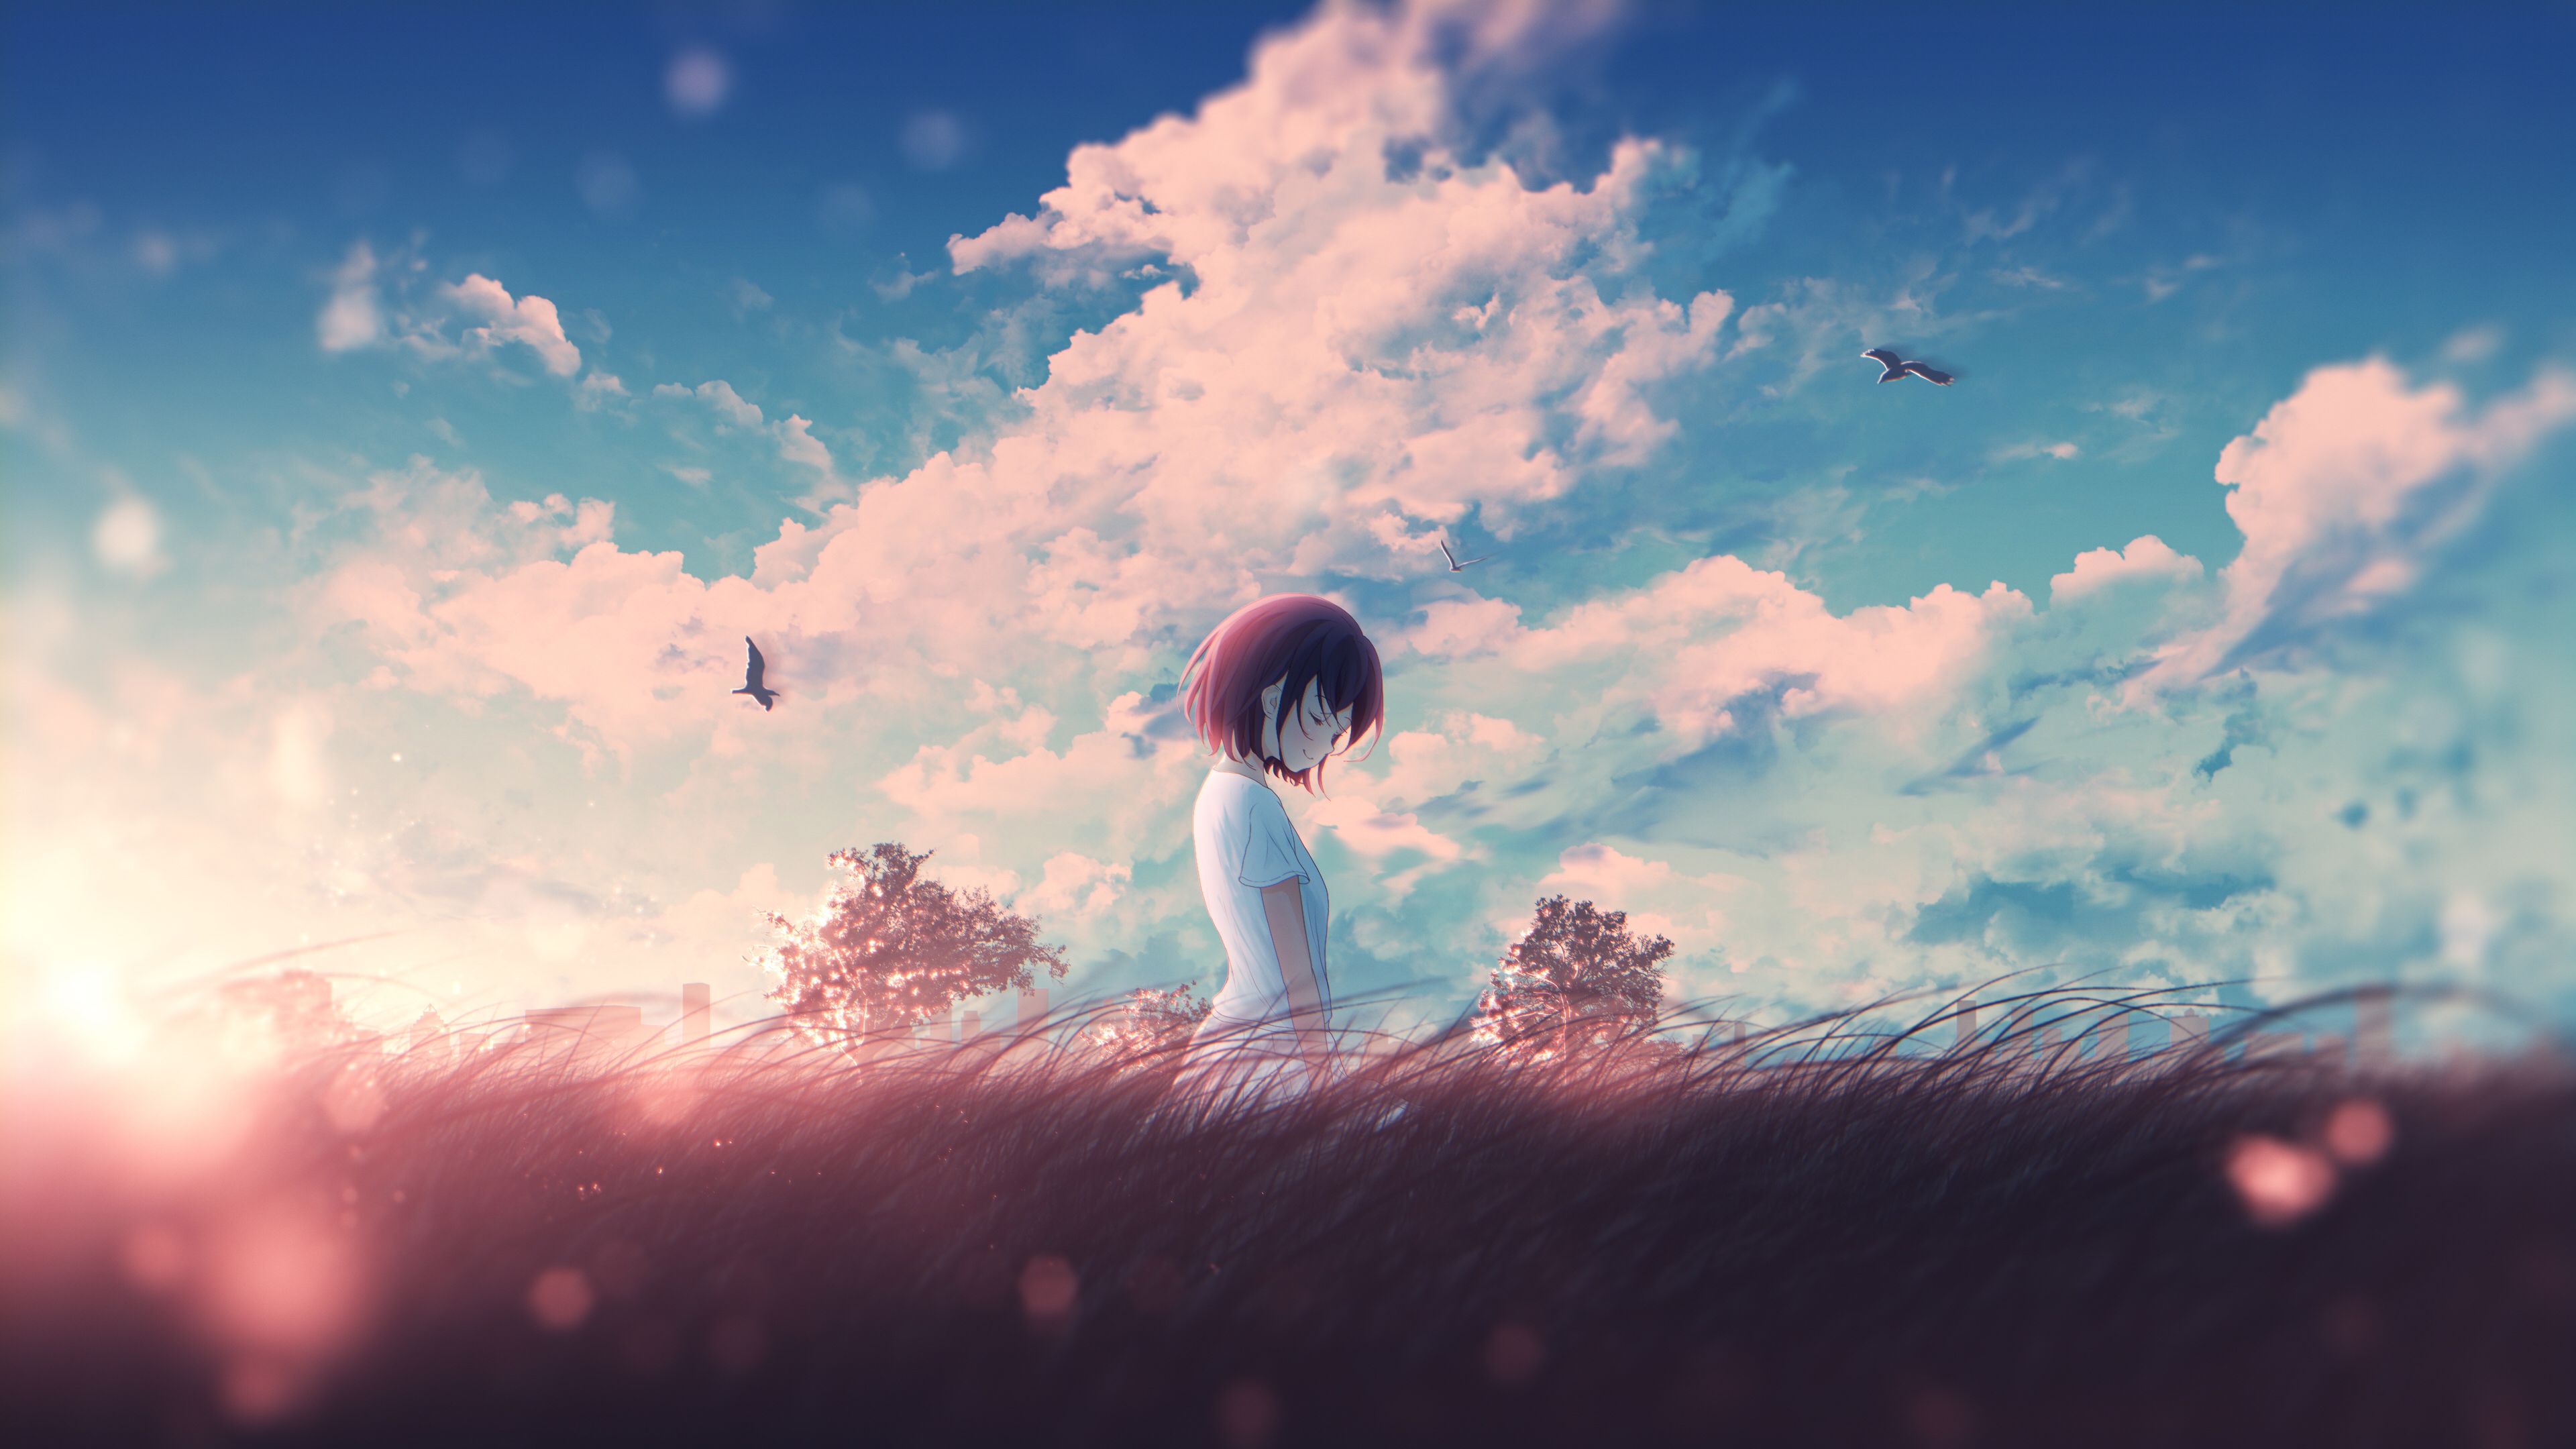 Wallpaper Anime Landscape, Mood, Sunlight, Field, Anime Girl, Relaxing, Clouds, Scenery:3840x2160